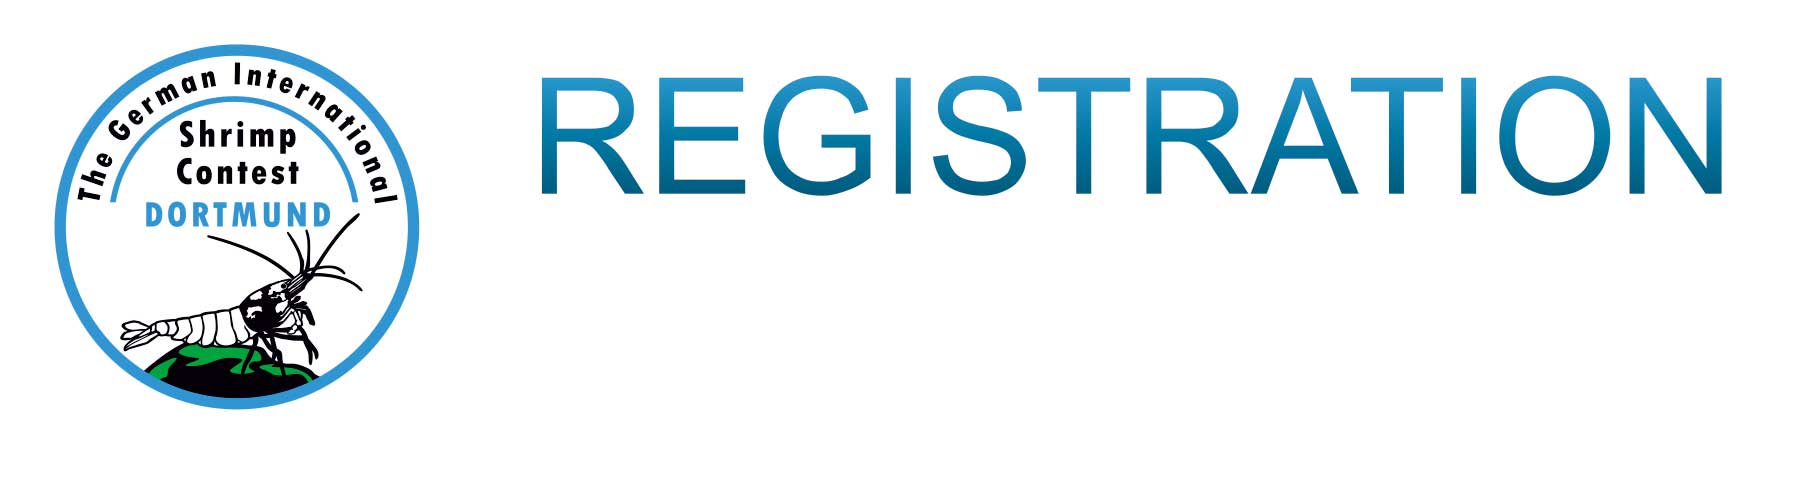 TGISC Registration contest